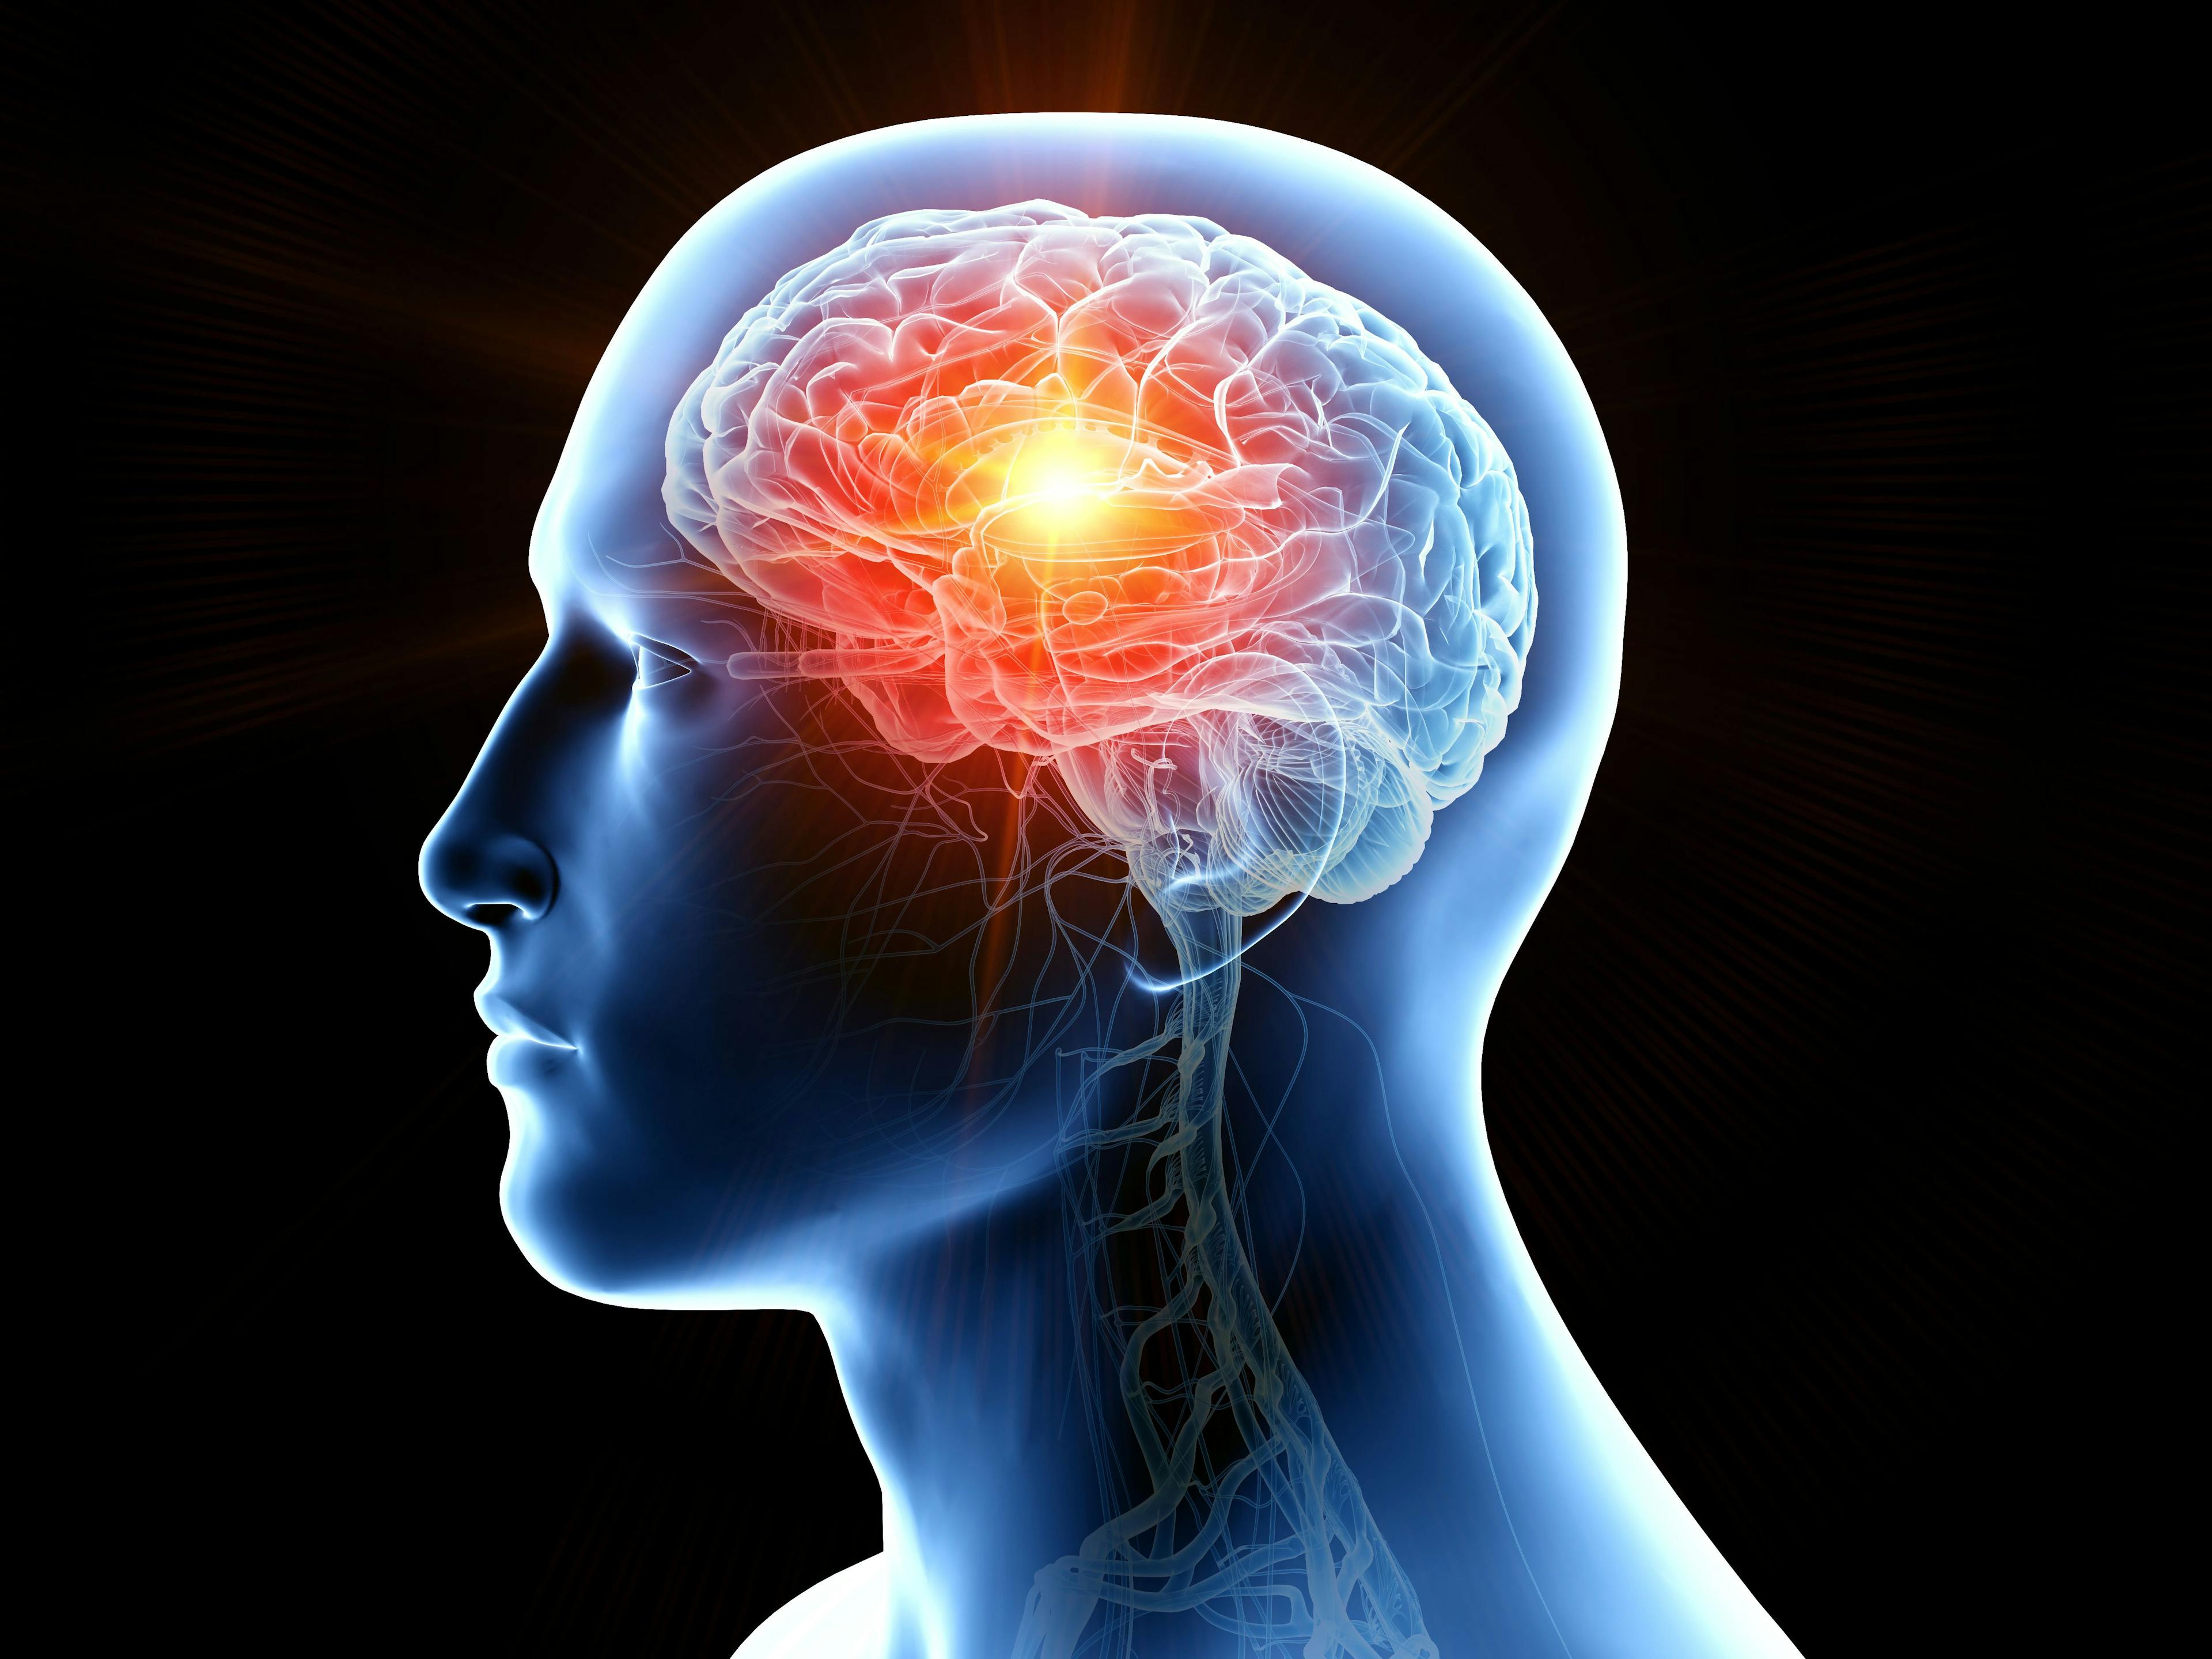 3D rendering of brain cancer: ©SciePro - stock.adobe.com